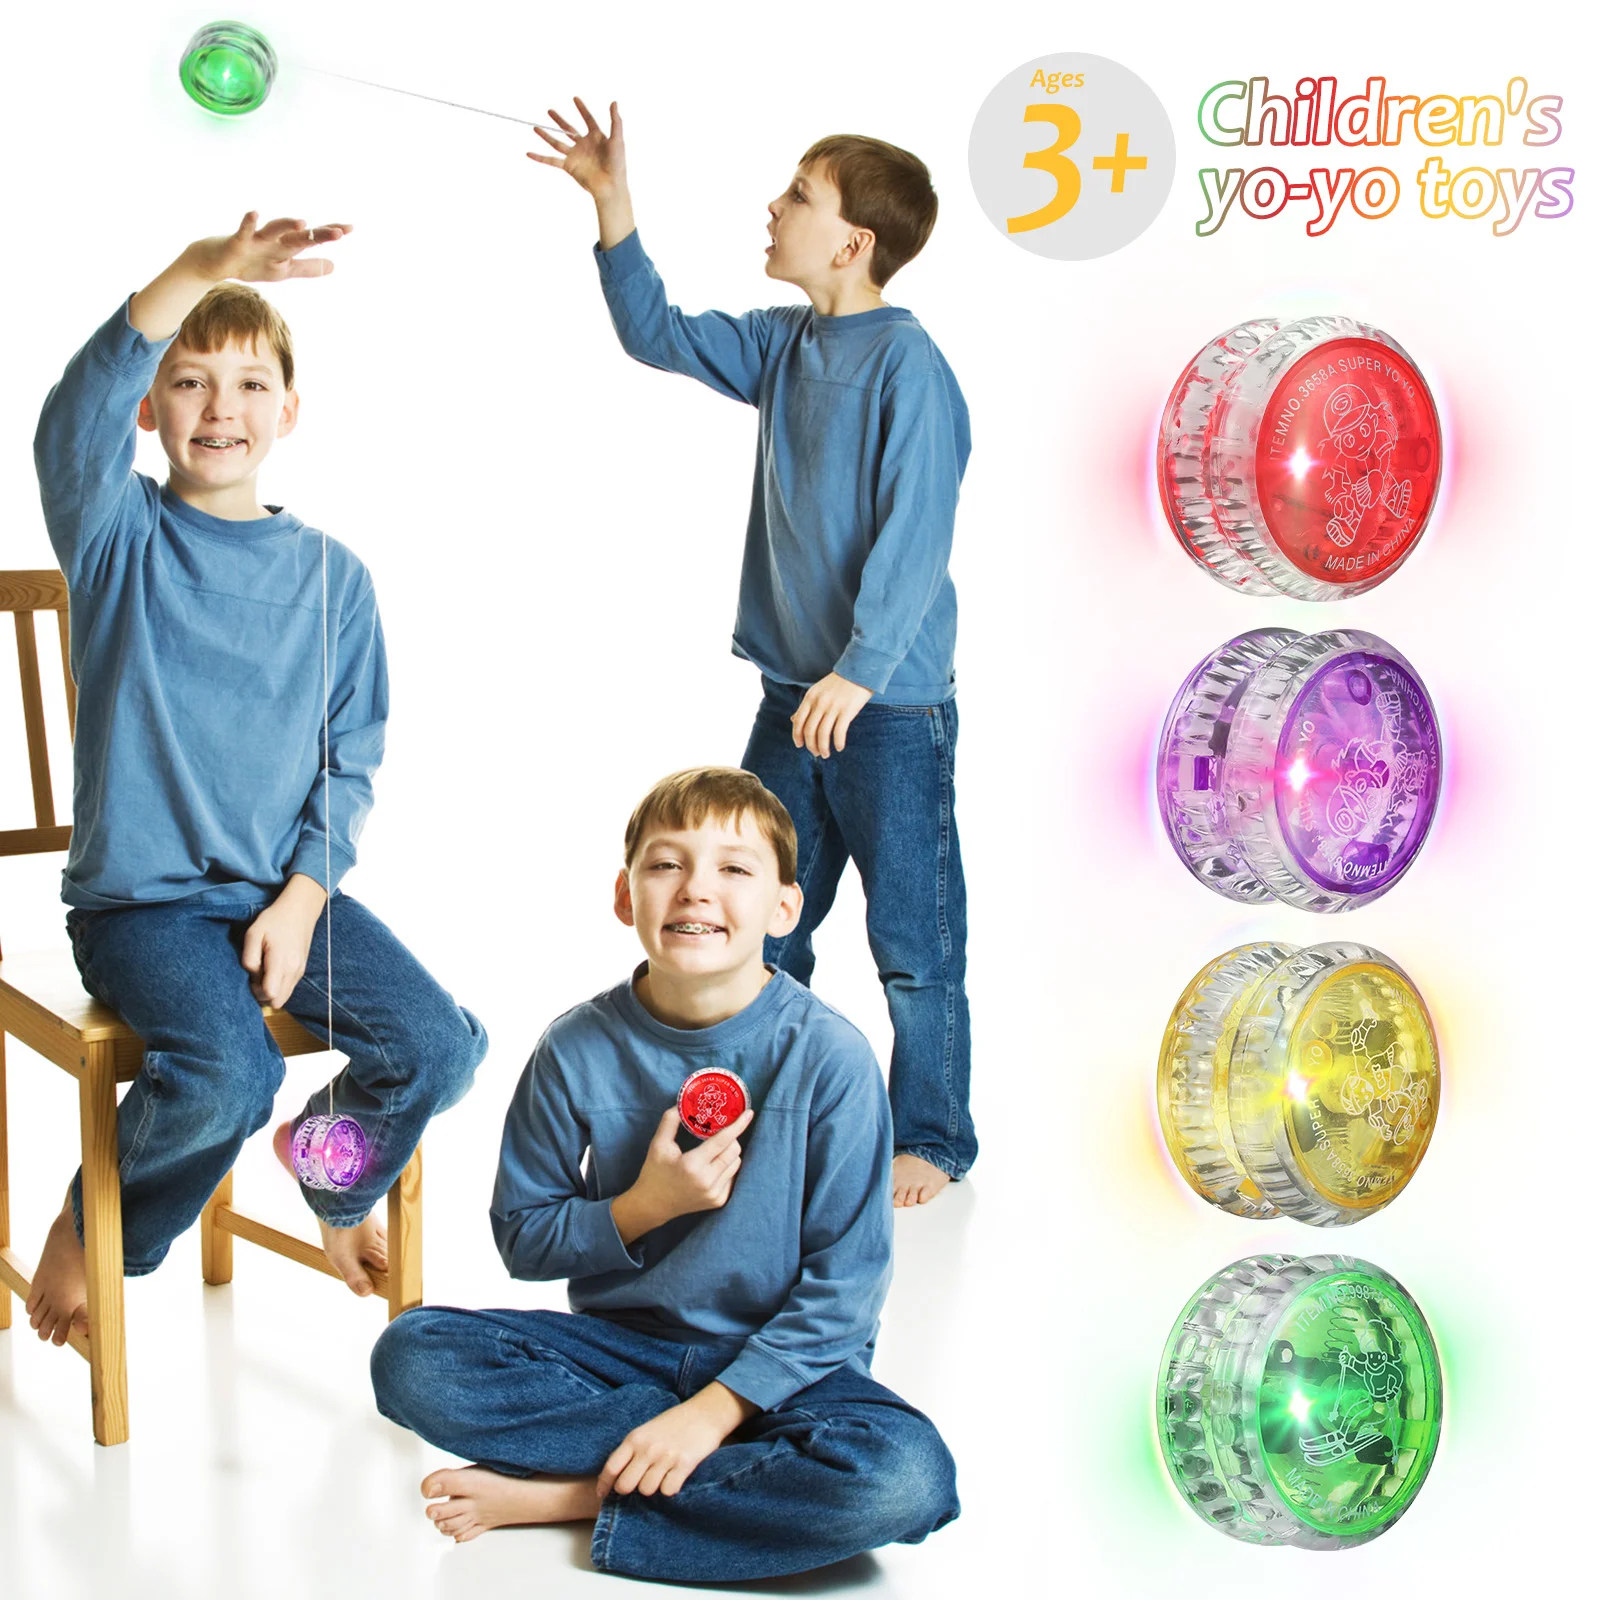 

6 шт., детские игрушки Yo-yo, яркие детские шарики с подсветкой